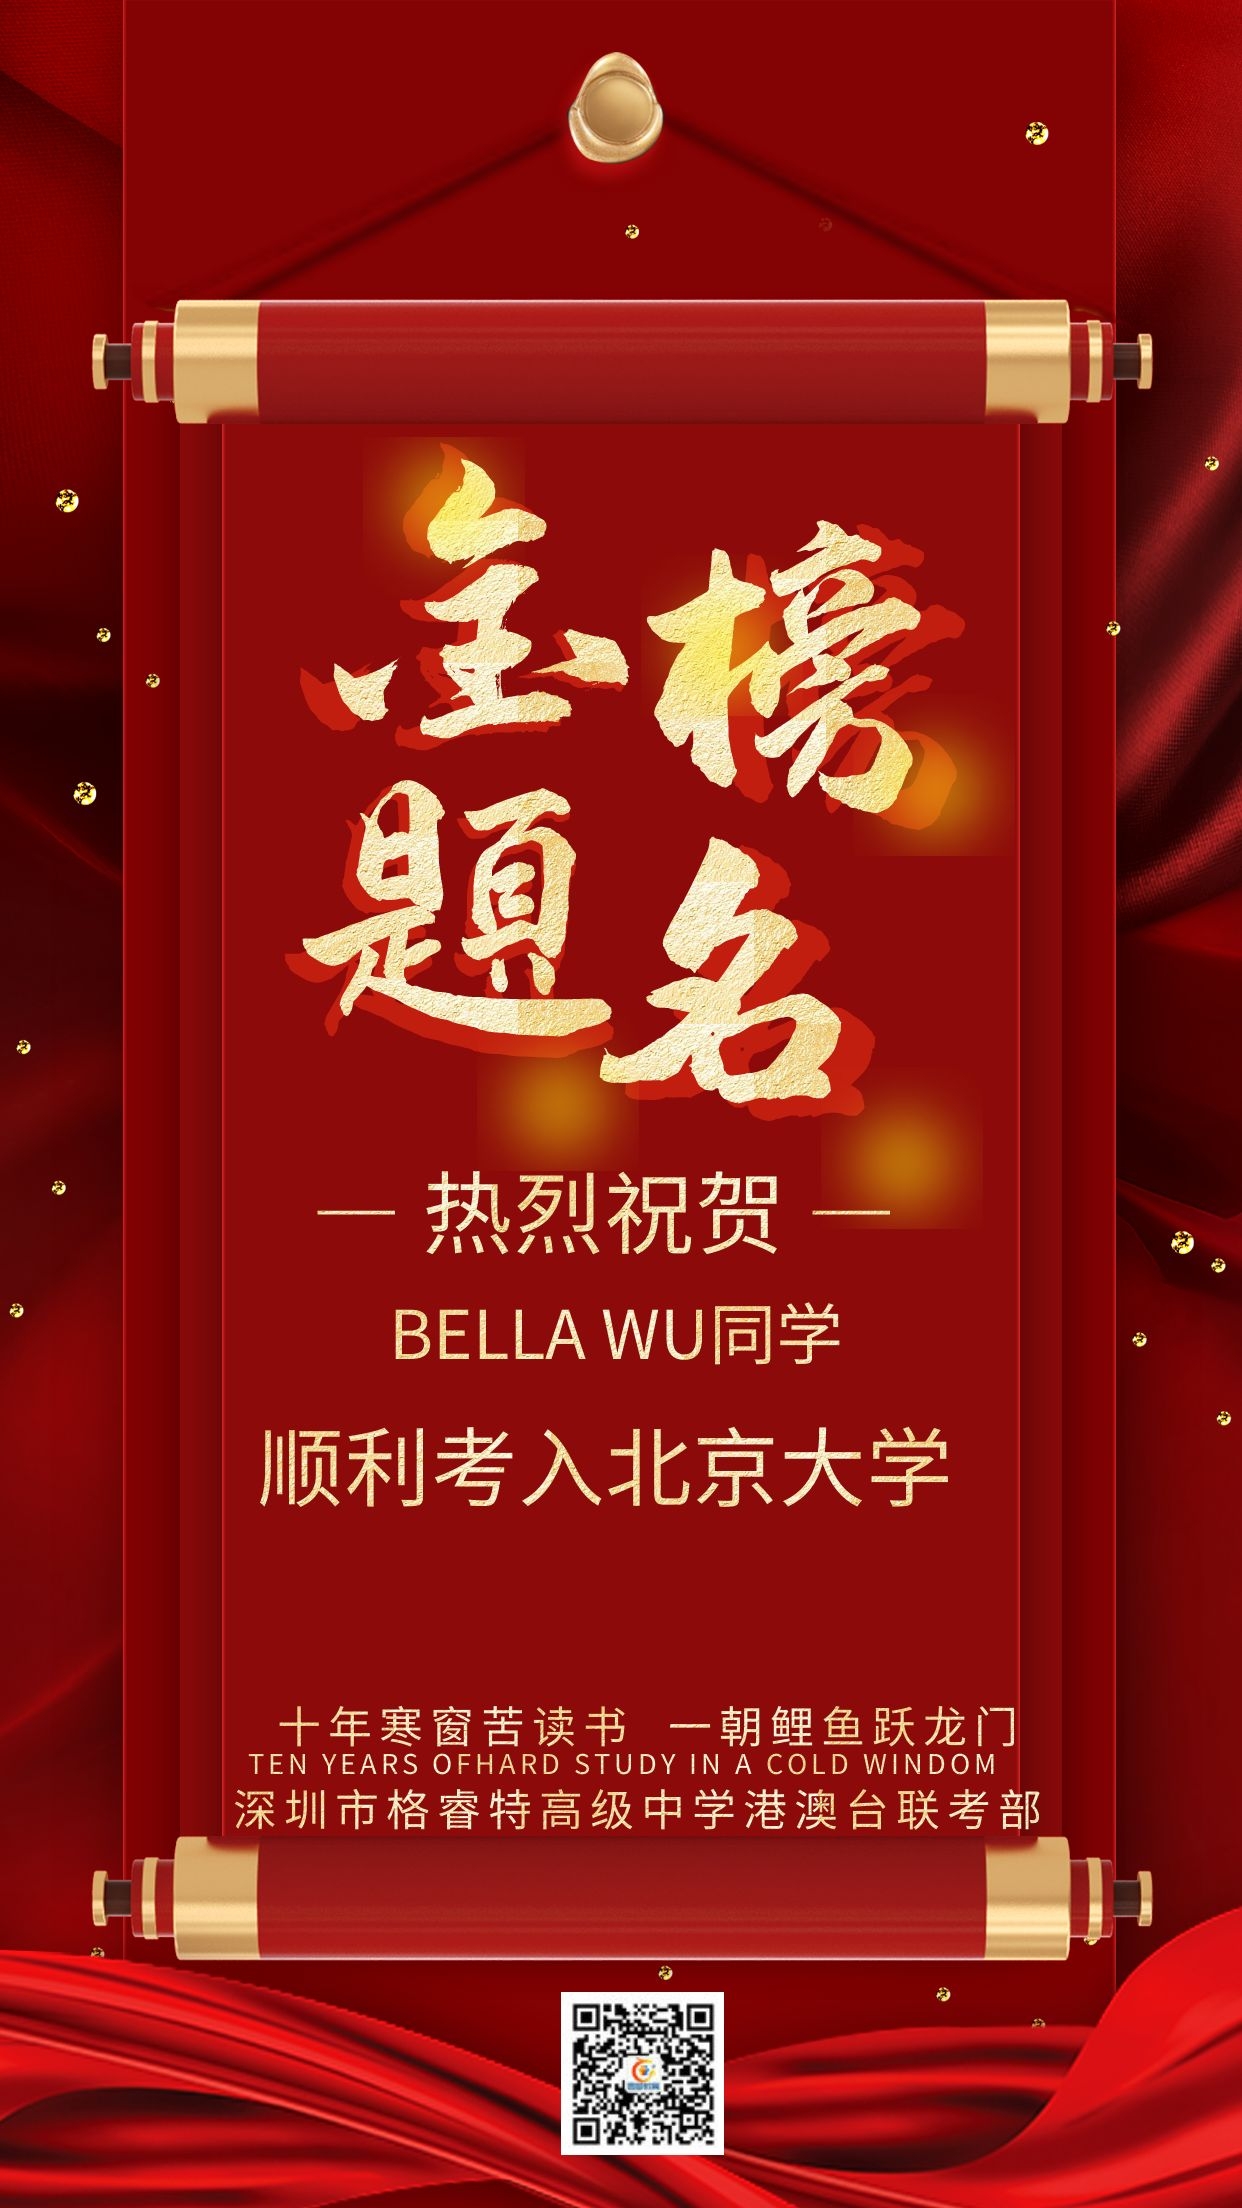 BELLA WU顺利考入北京大学